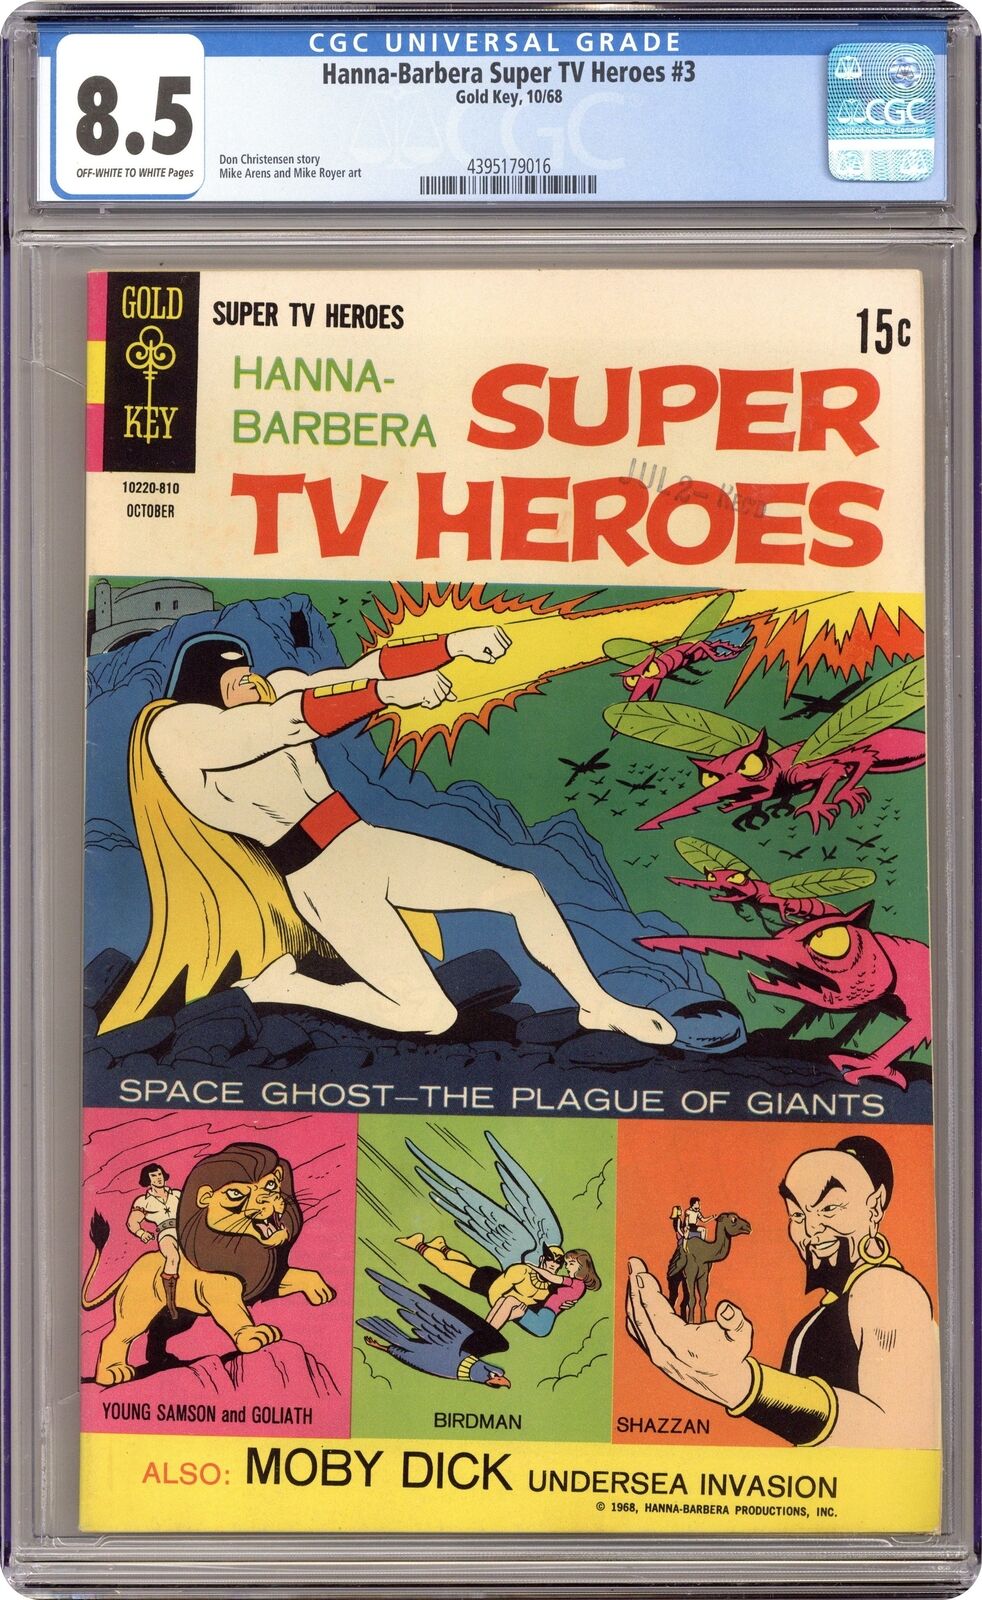 Hanna-Barbera Super TV Heroes #3 CGC 8.5 1968 4395179016